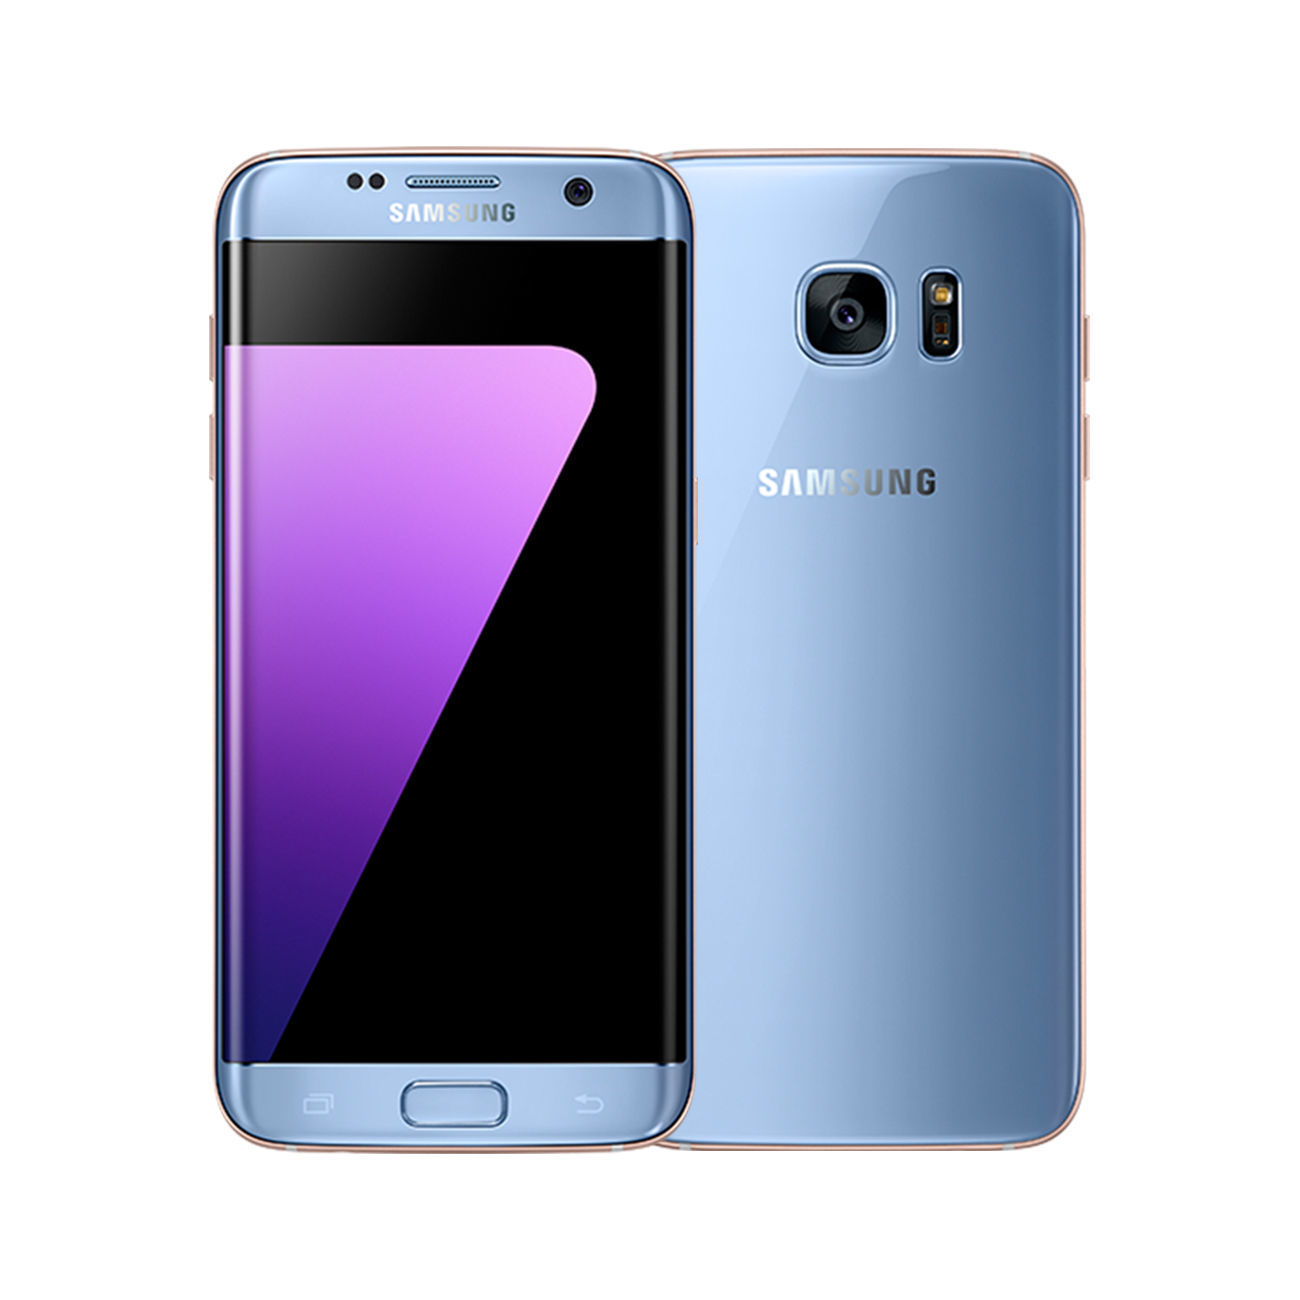 Samsung Galaxy S7 edge [64GB] [Coral Blue] [Imperfect]